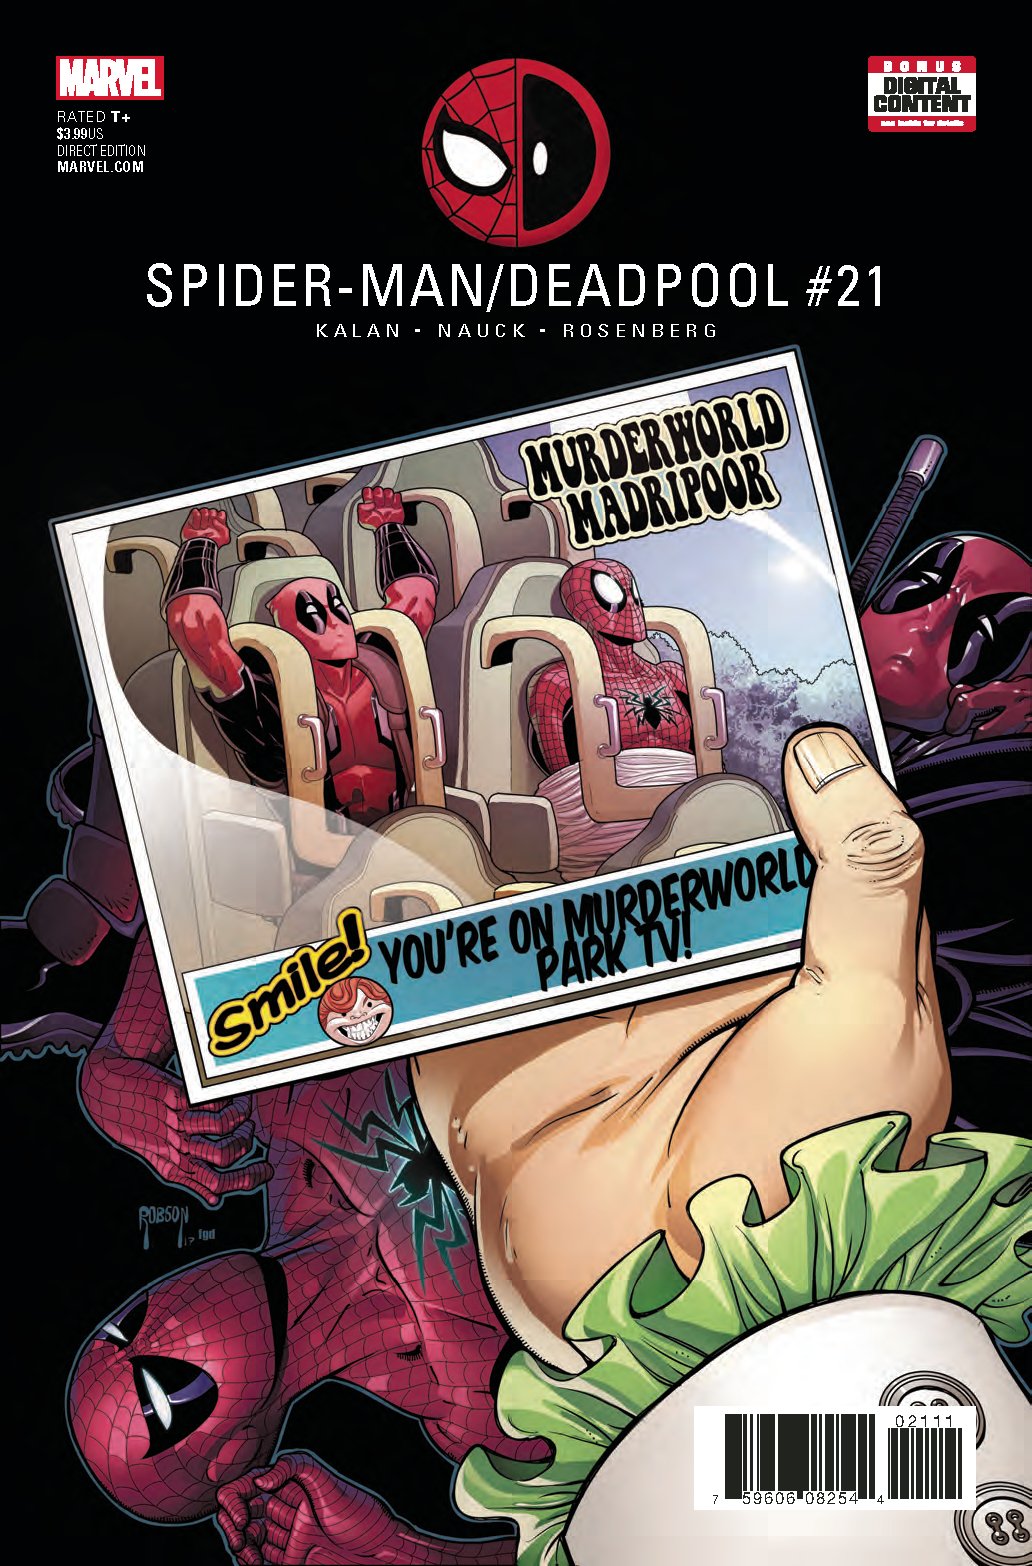 SPIDER-MAN DEADPOOL #21 COVER